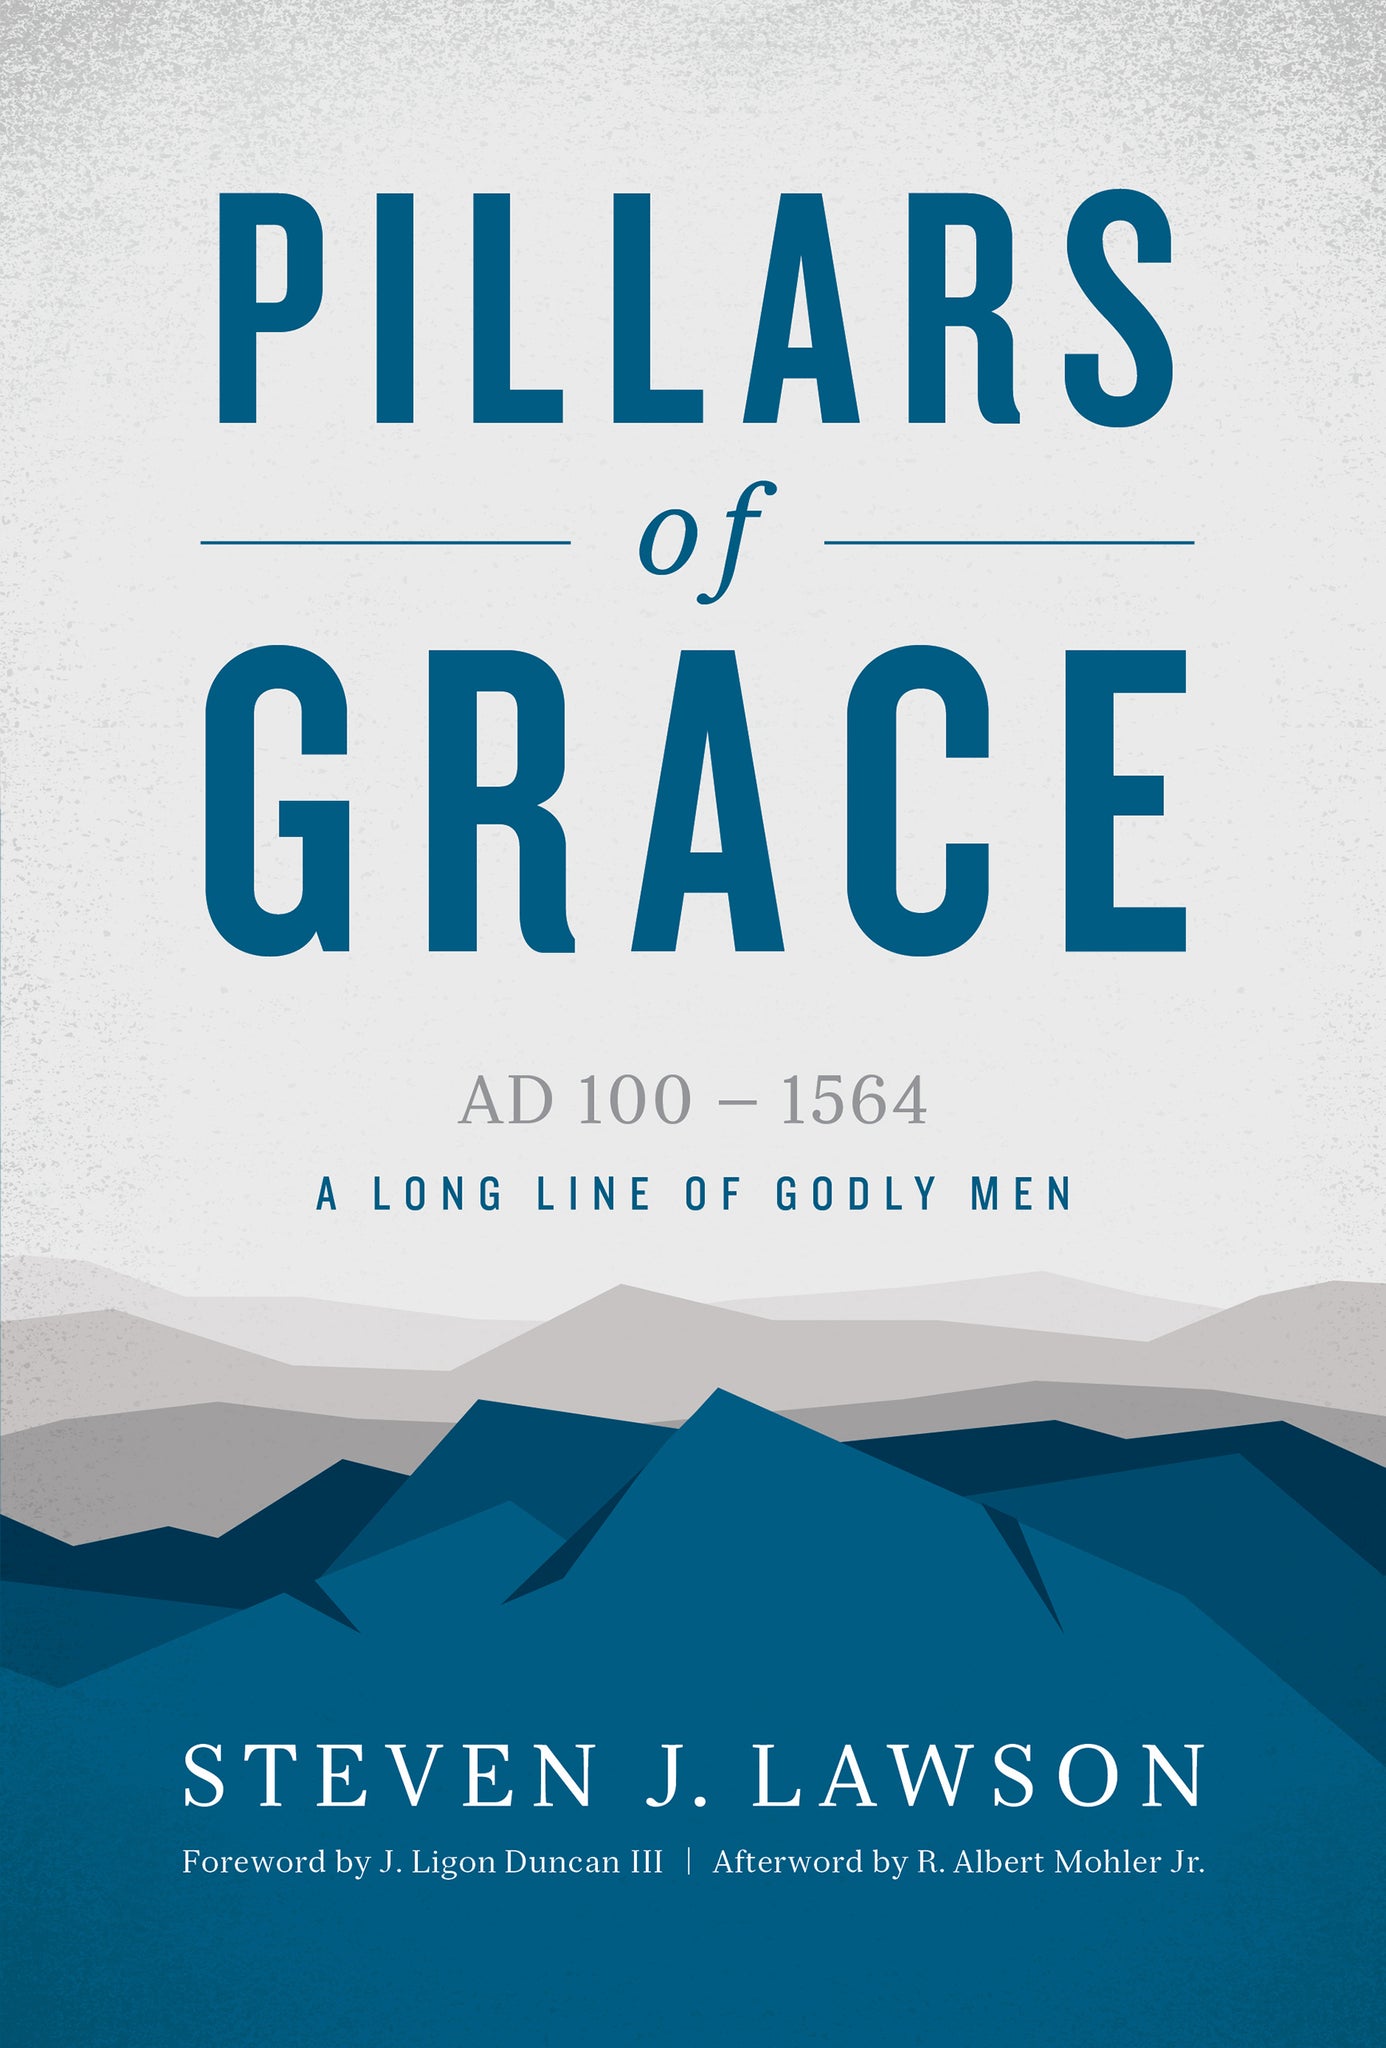 A Long Line of Godly Men - Pillars of Grace: AD 100 - 1564